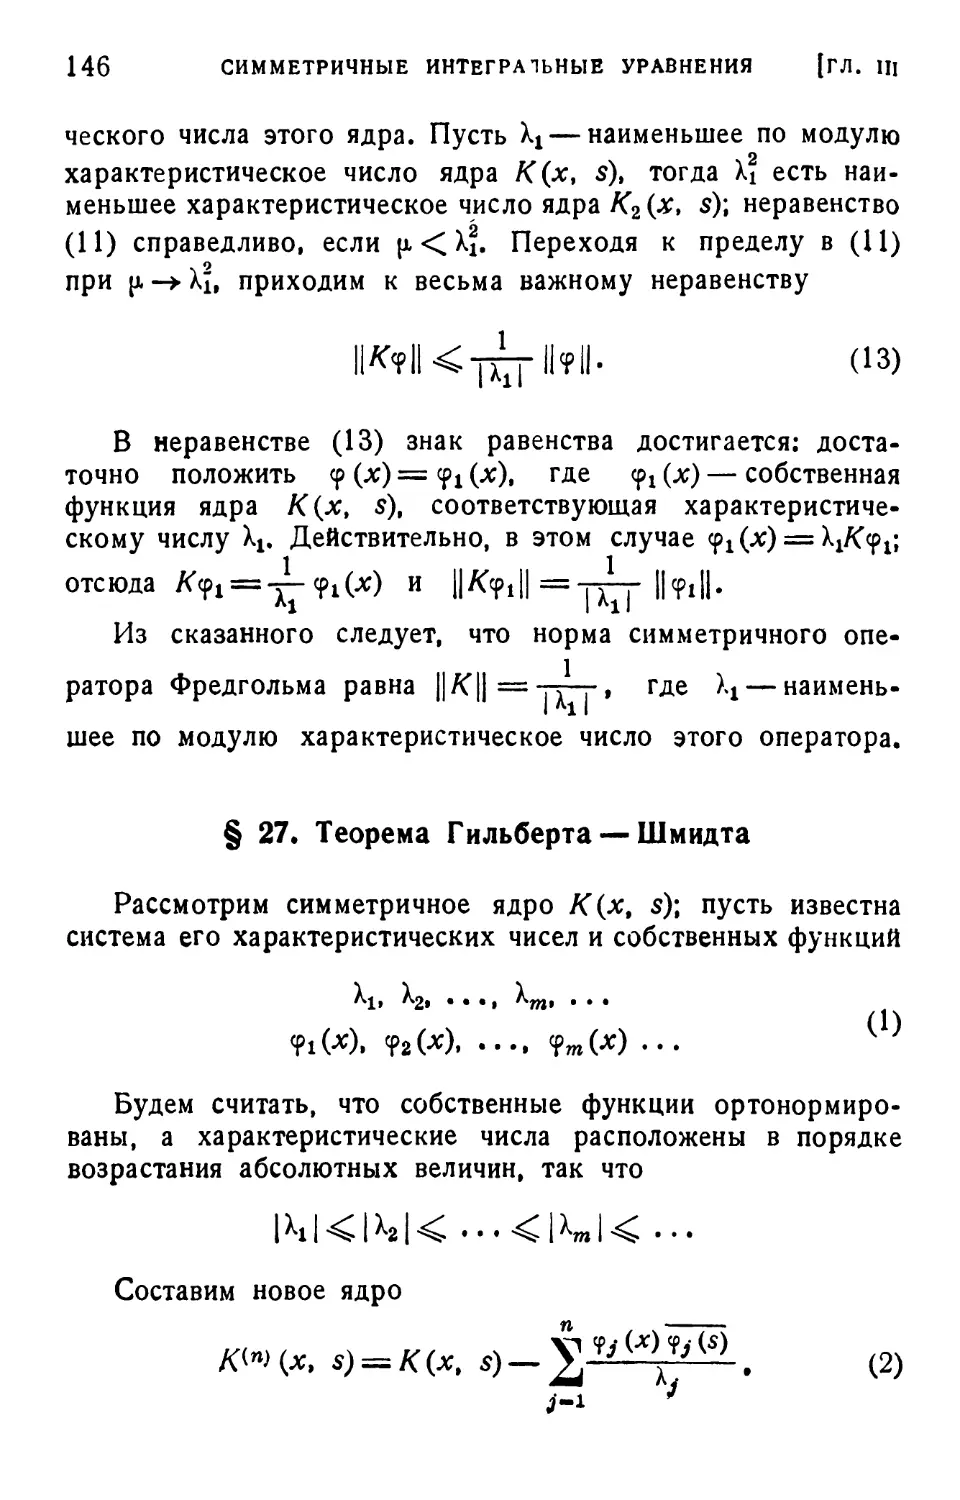 § 27. Теорема Гильберта — Шмидта